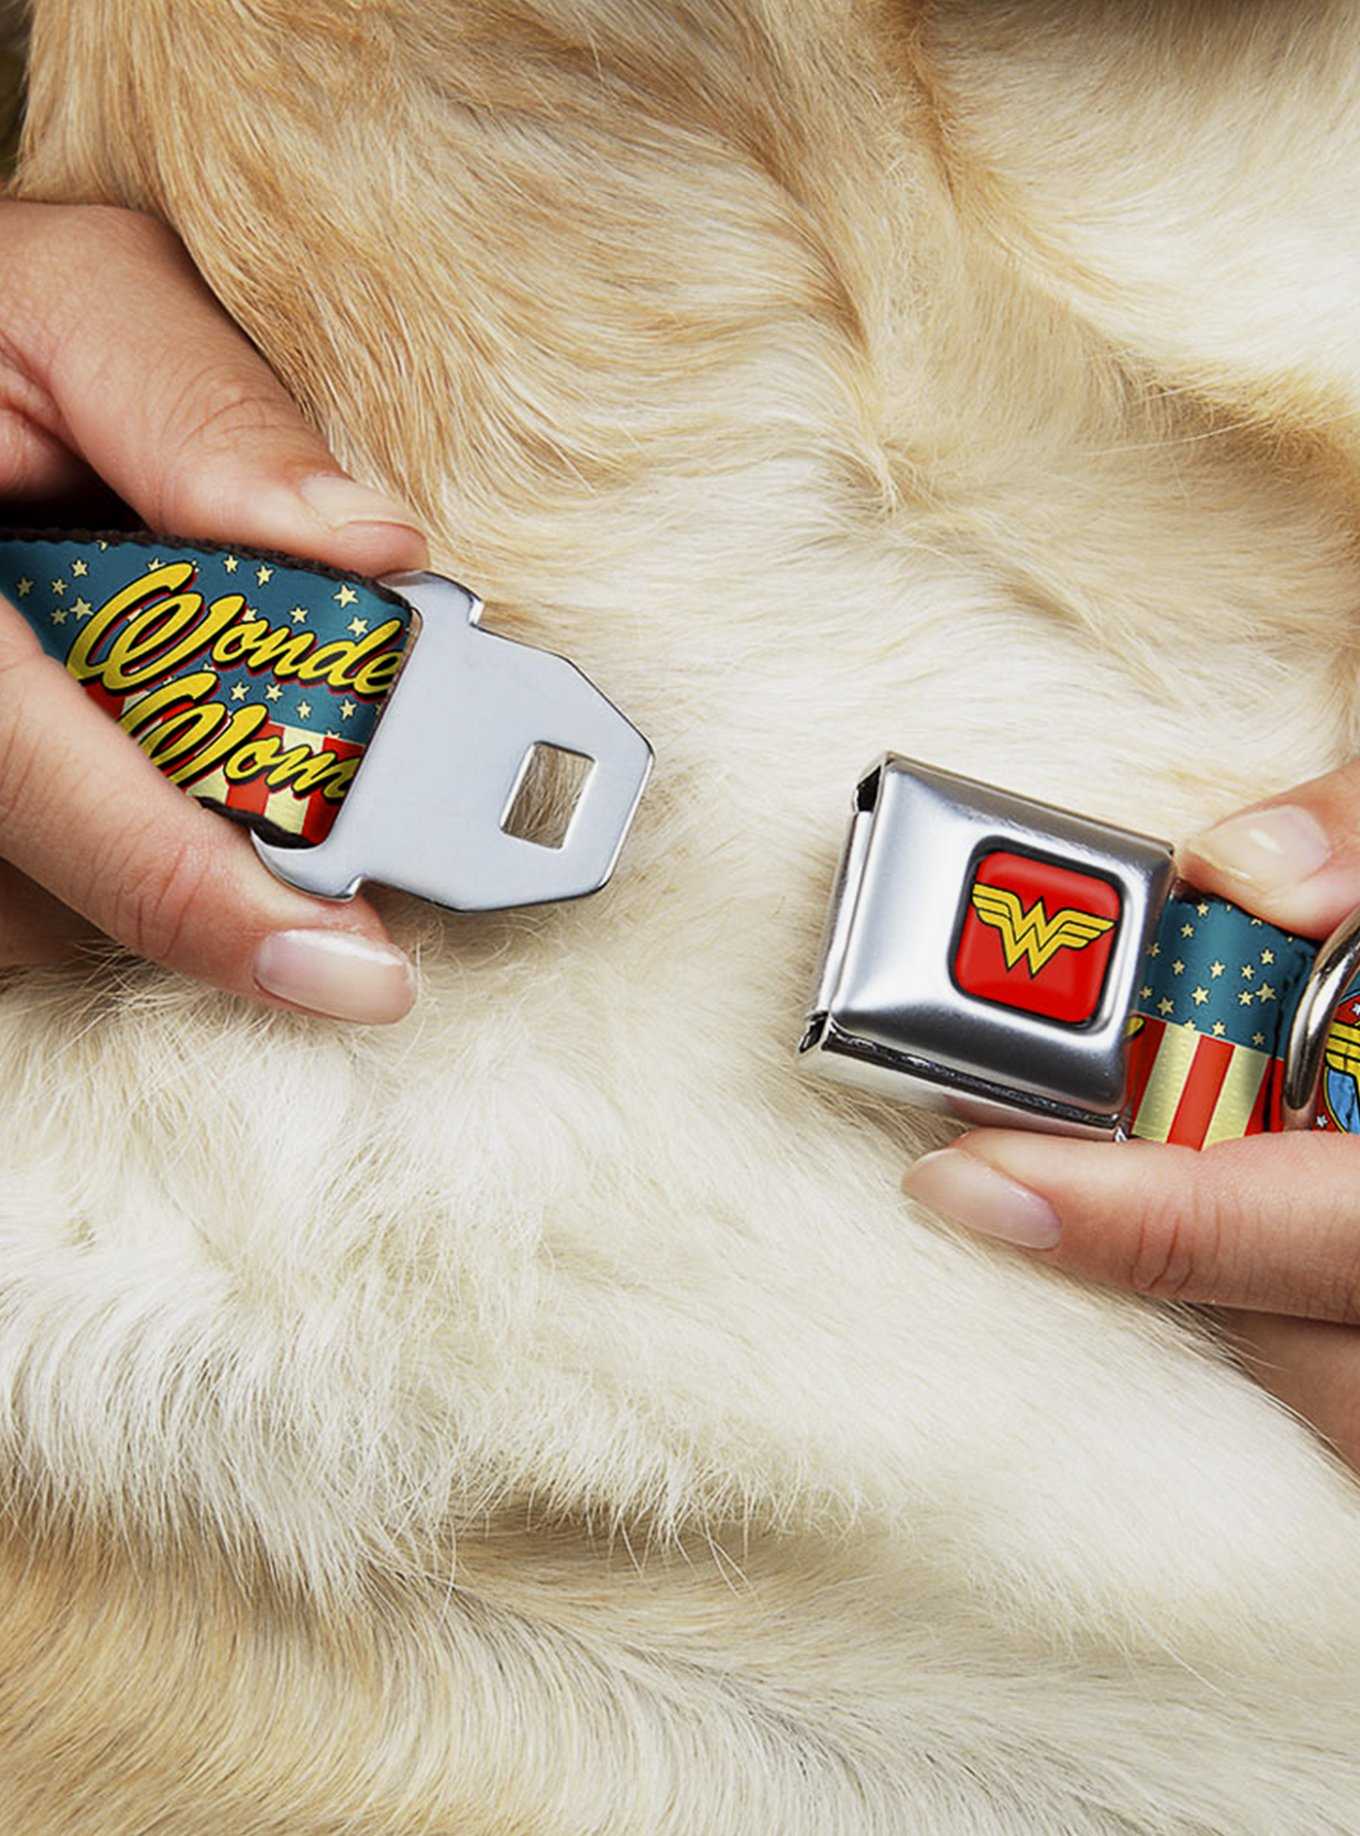 DC Comics Justice League Wonder Woman Logo Americana Seatbelt Buckle Dog Collar, , hi-res